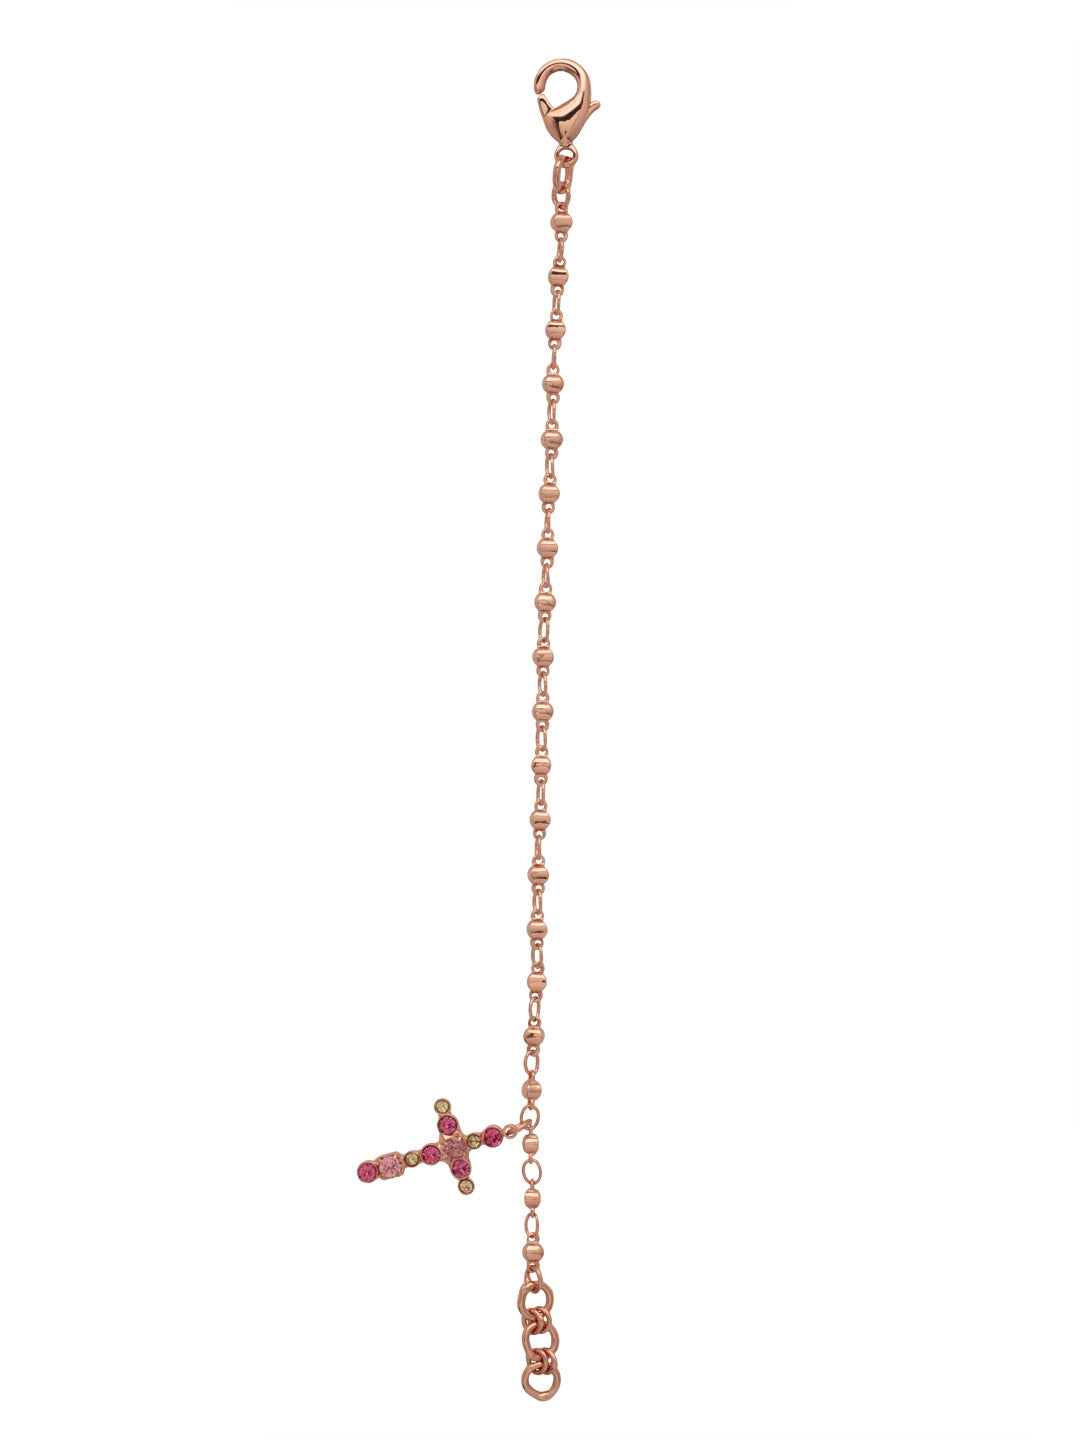 Product Image: Miley Cross Charm Bracelet